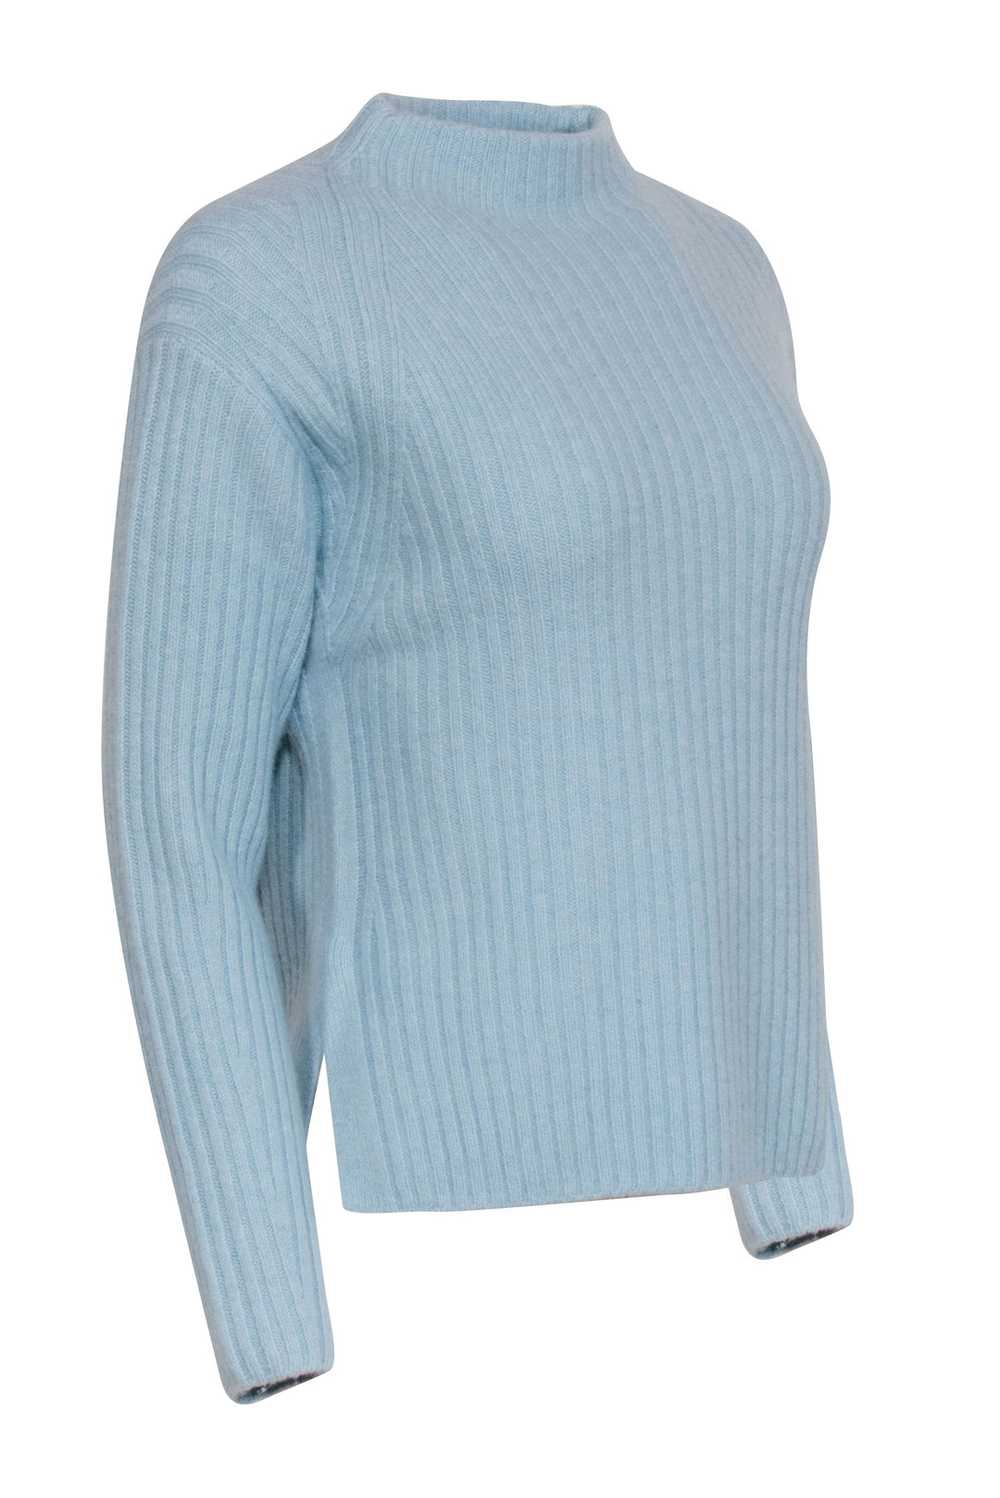 Vince - Pastel Blue Ribbed Mock Neck Sweater Sz S - image 2